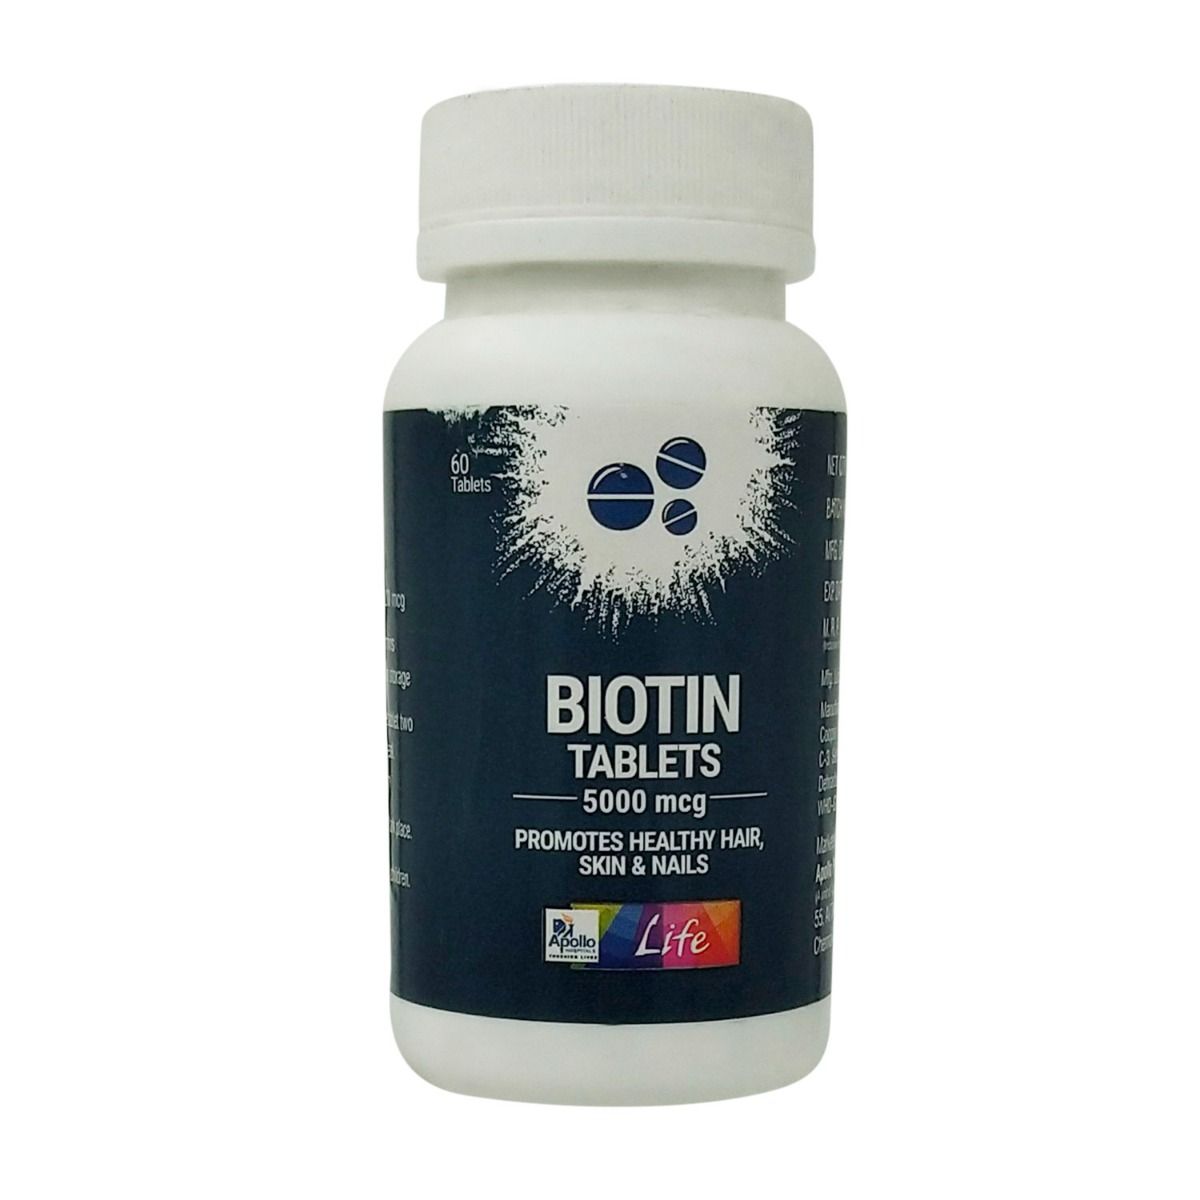 Apollo Life Biotin 5000 mcg, 60 Tablets, Pack of 1 